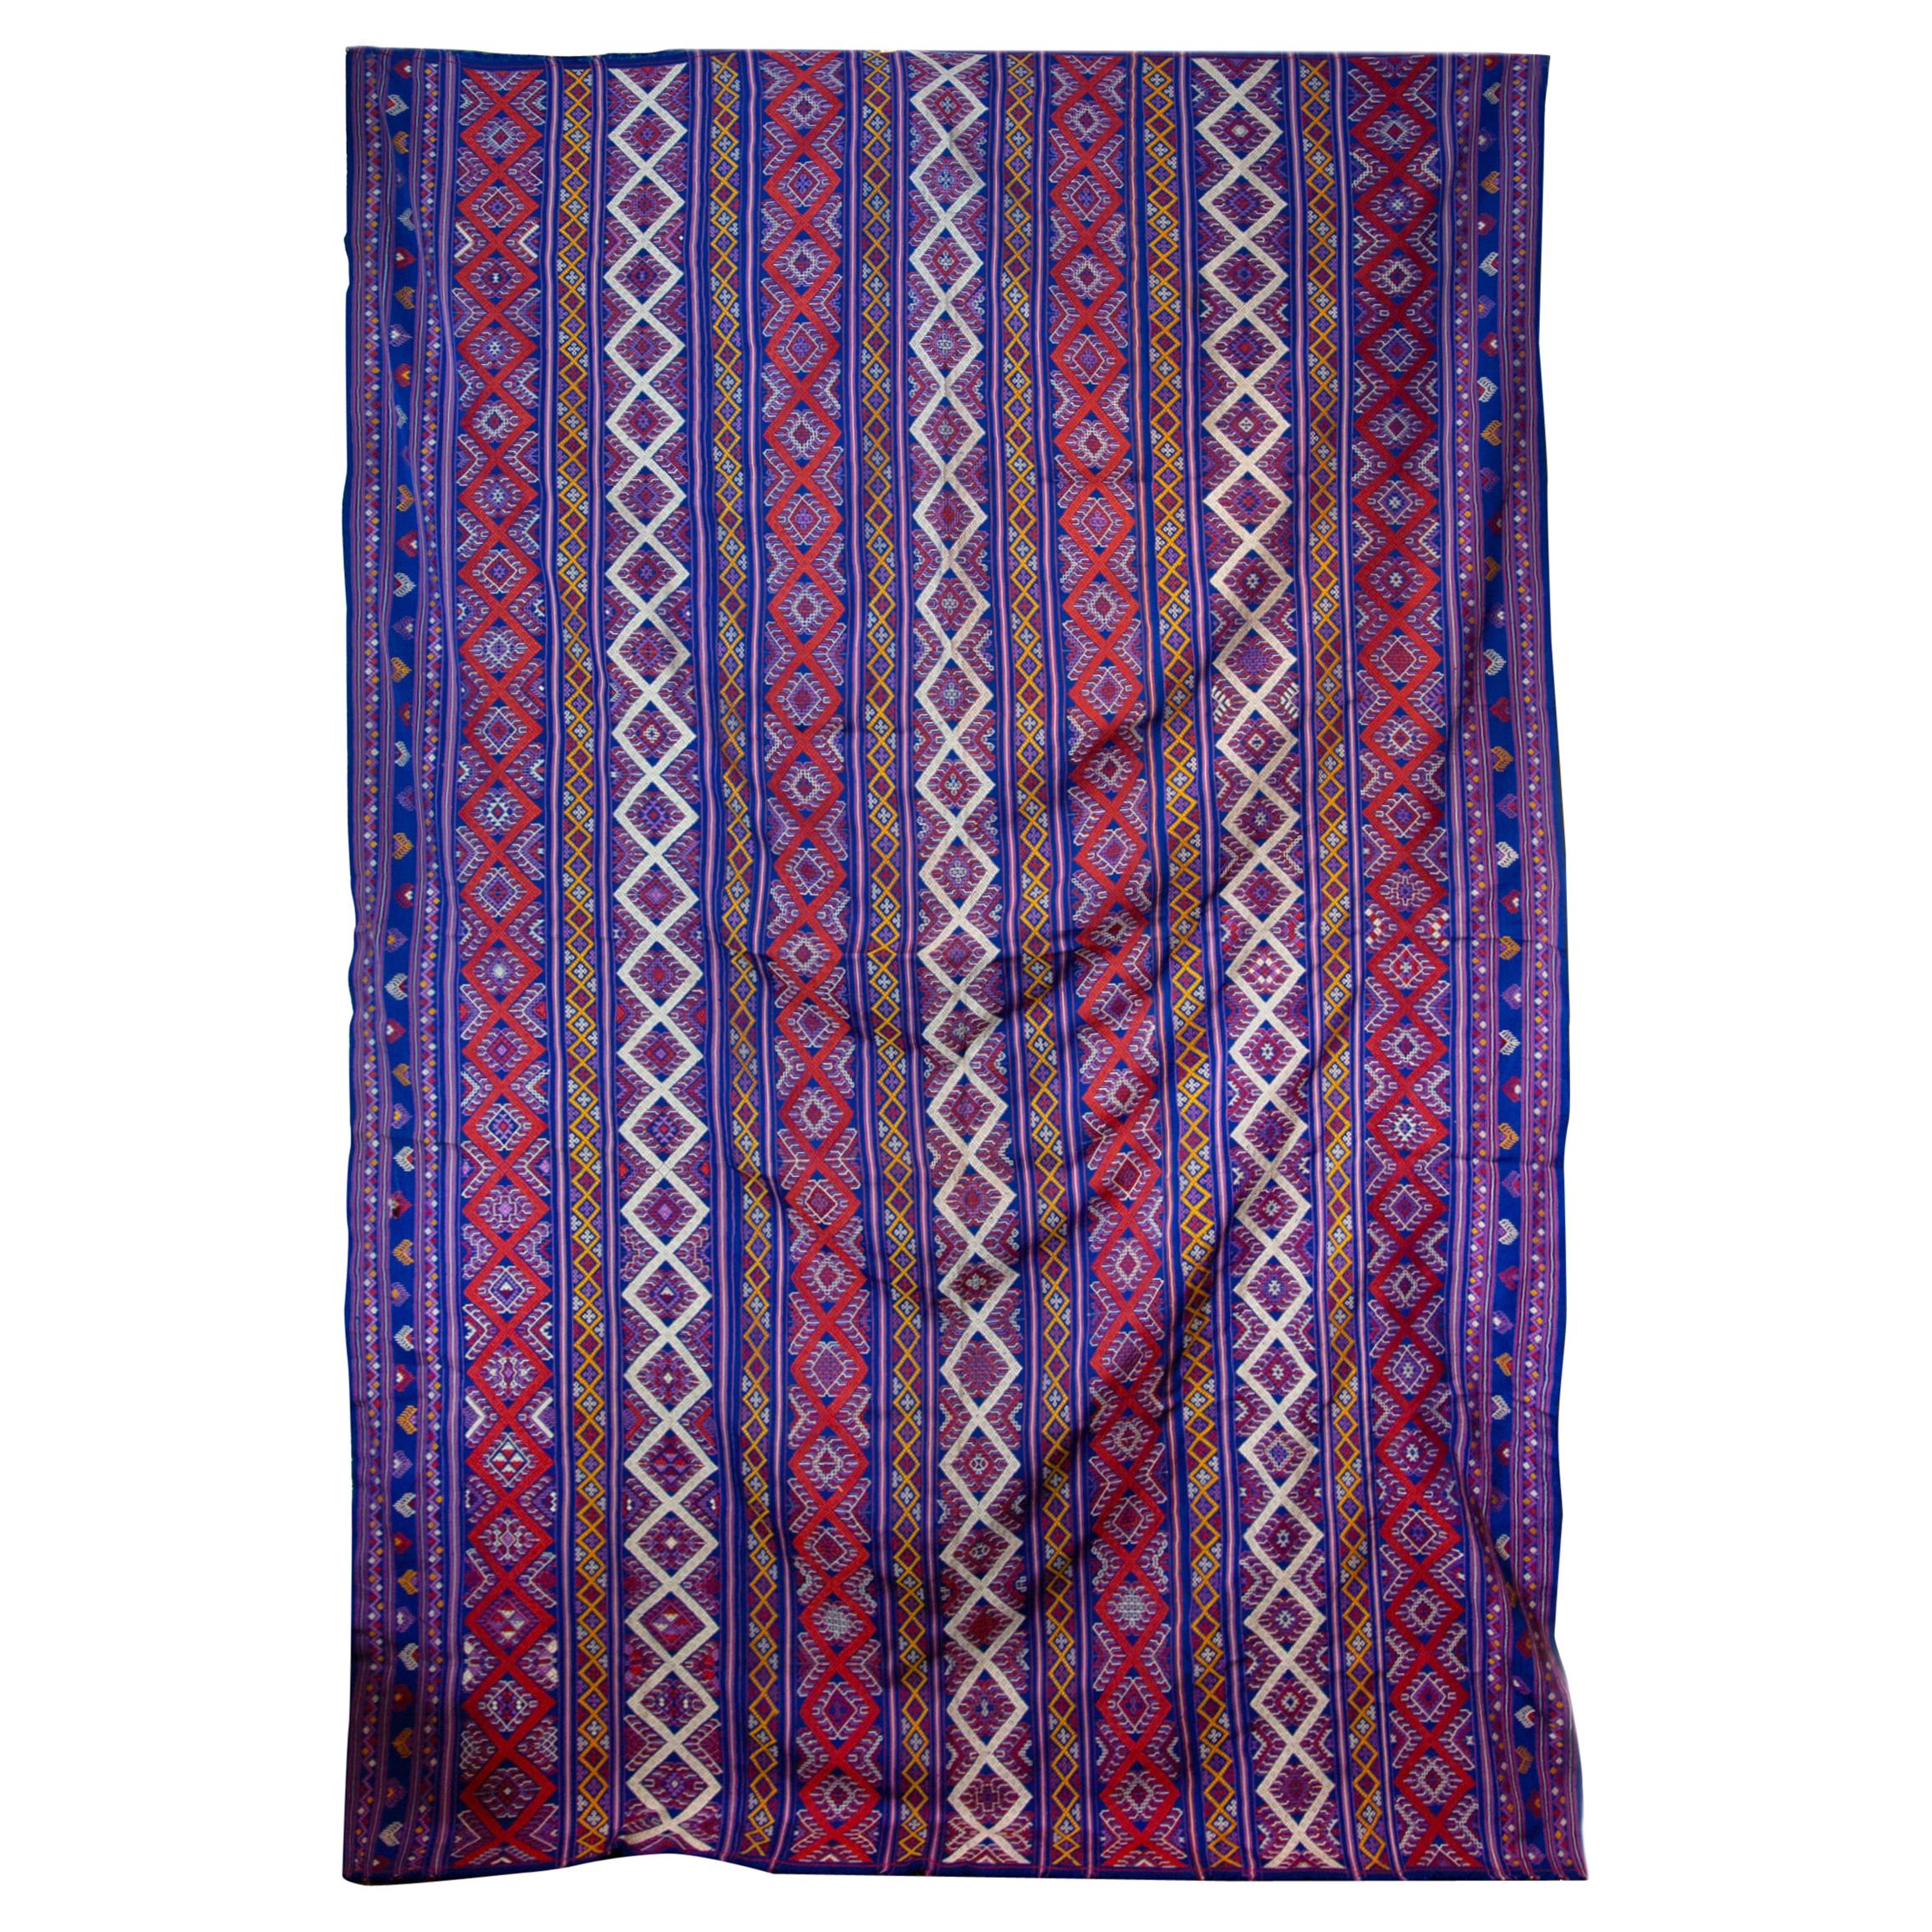 Bhutanese Silk Woven Kira Textile, Purple, Orange and White on Blue